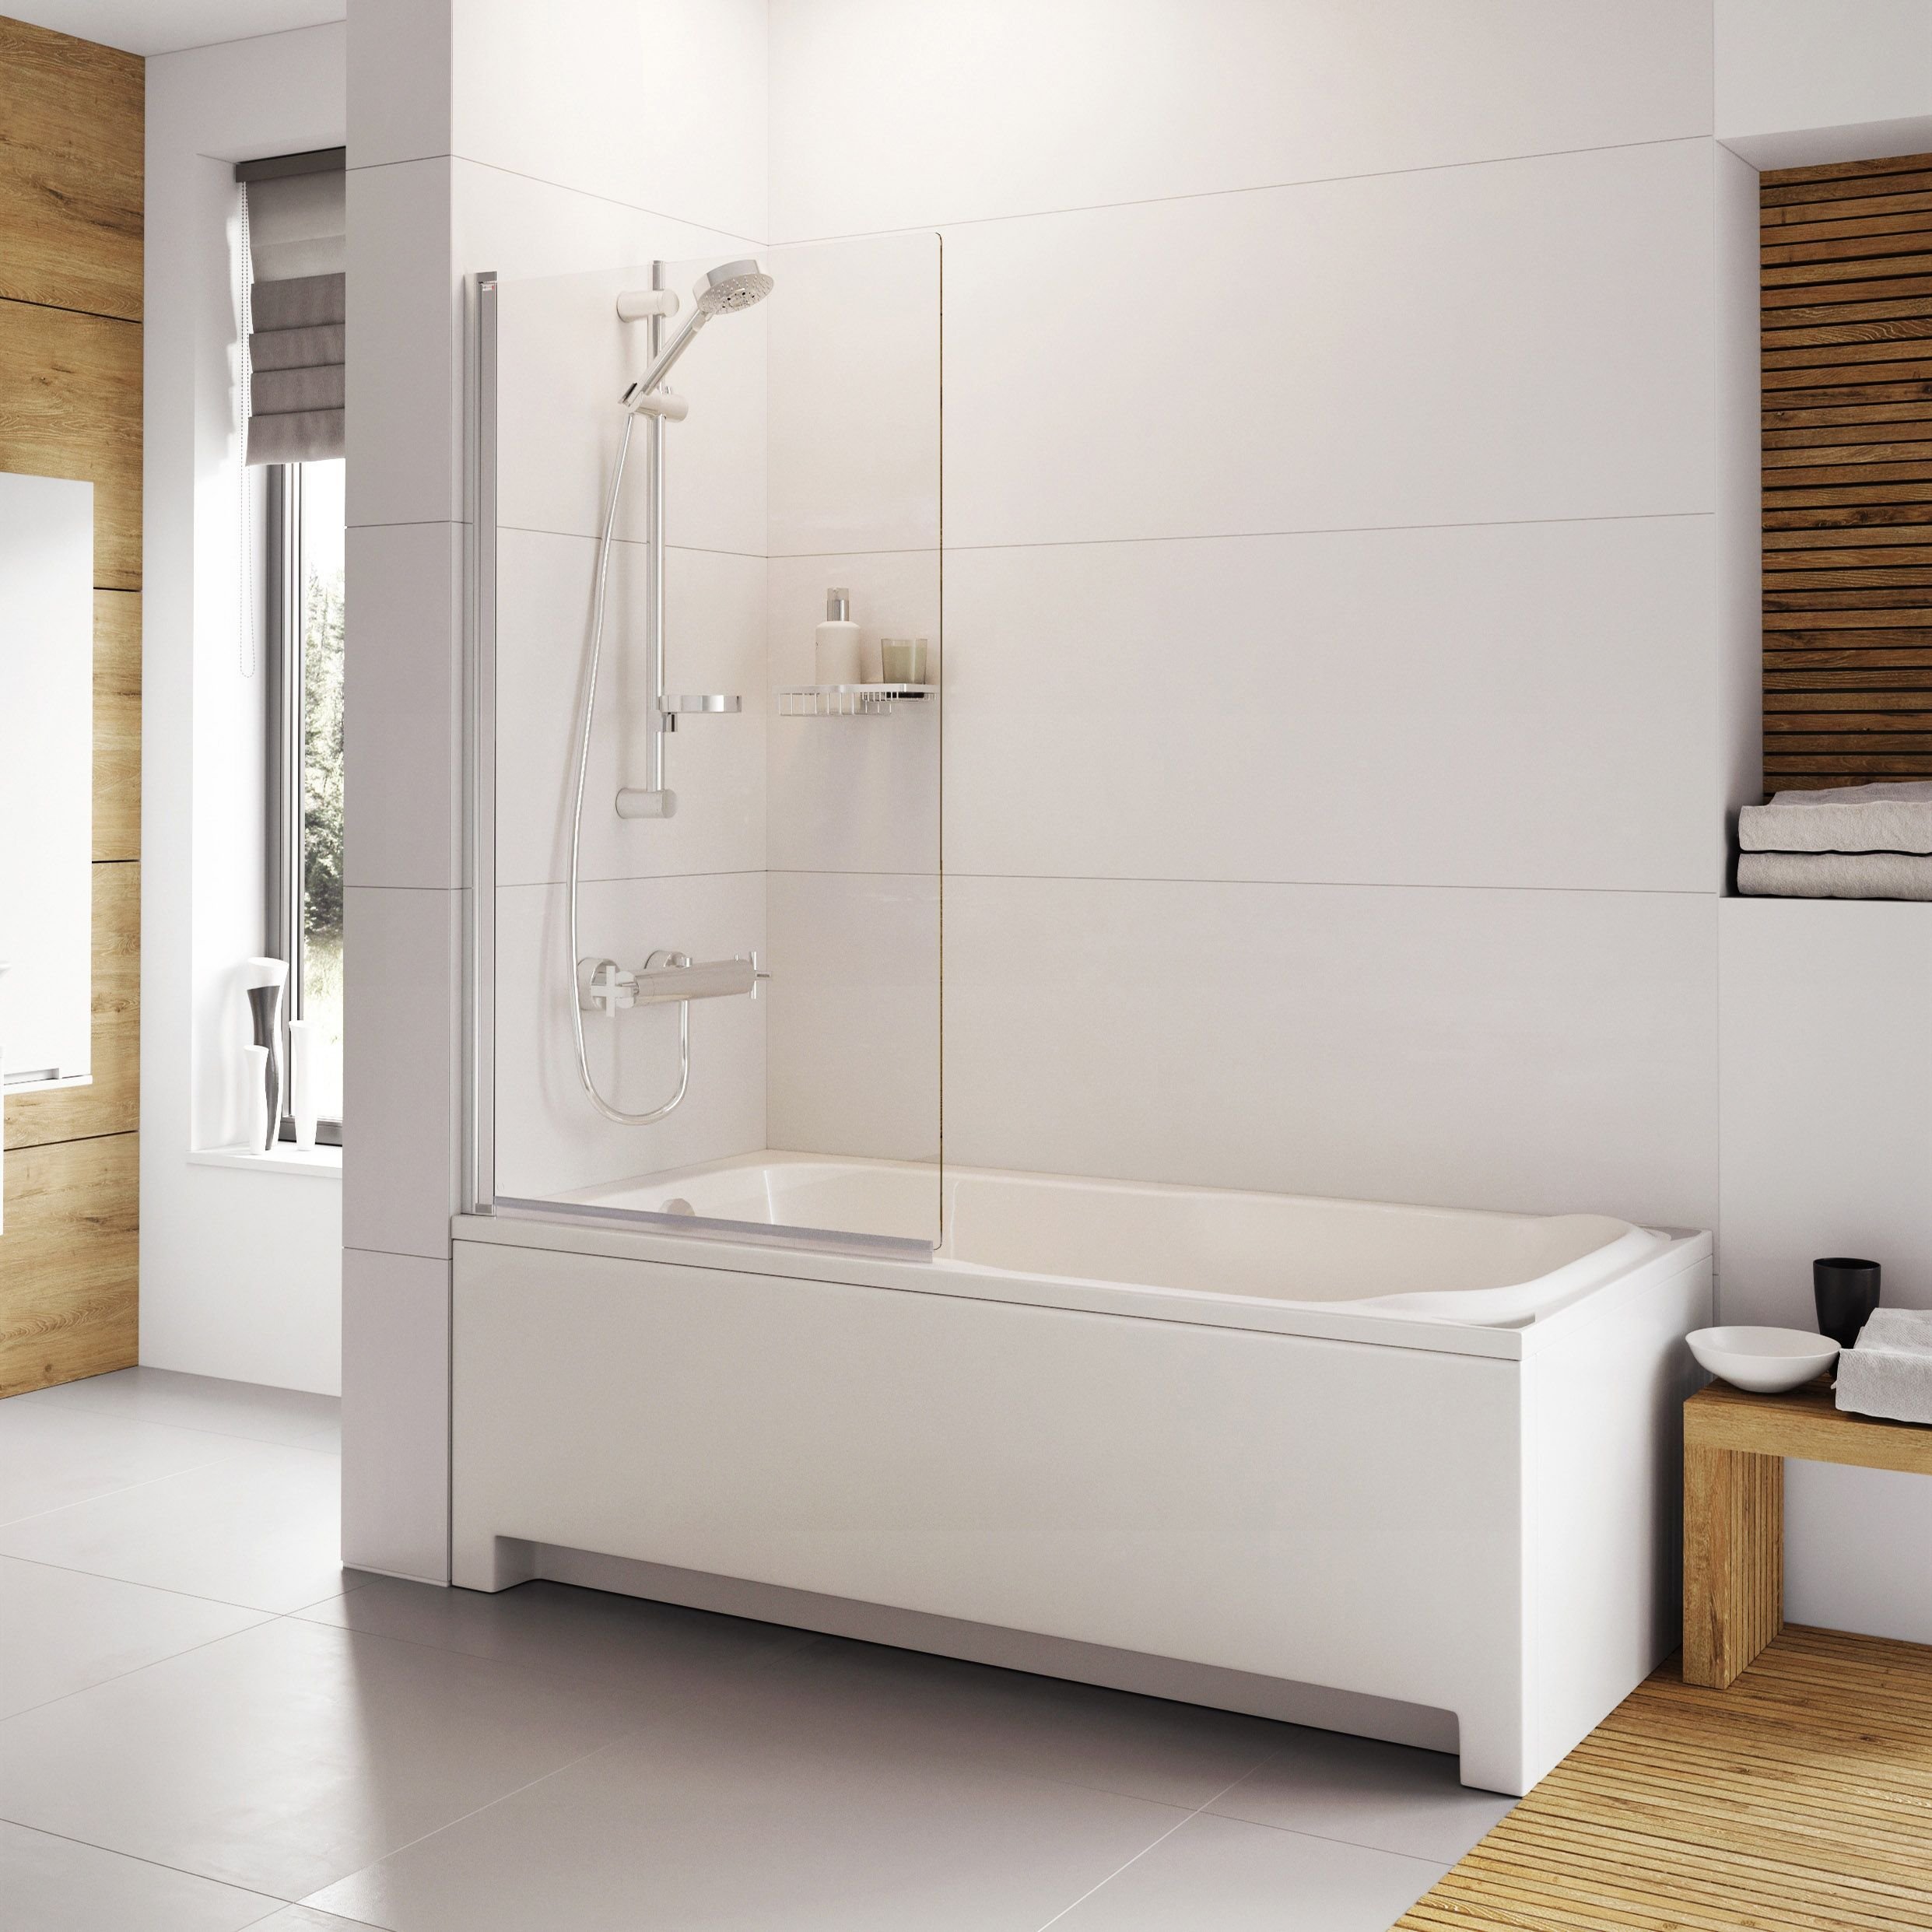 Стеклянная шторка угловая. Стеклянная шторка perfect House Basic Arica 800x400 mm. Стеклянная шторка для ванной. Ванна со стеклянной шторкой. Стеклянные шторы для ванной.